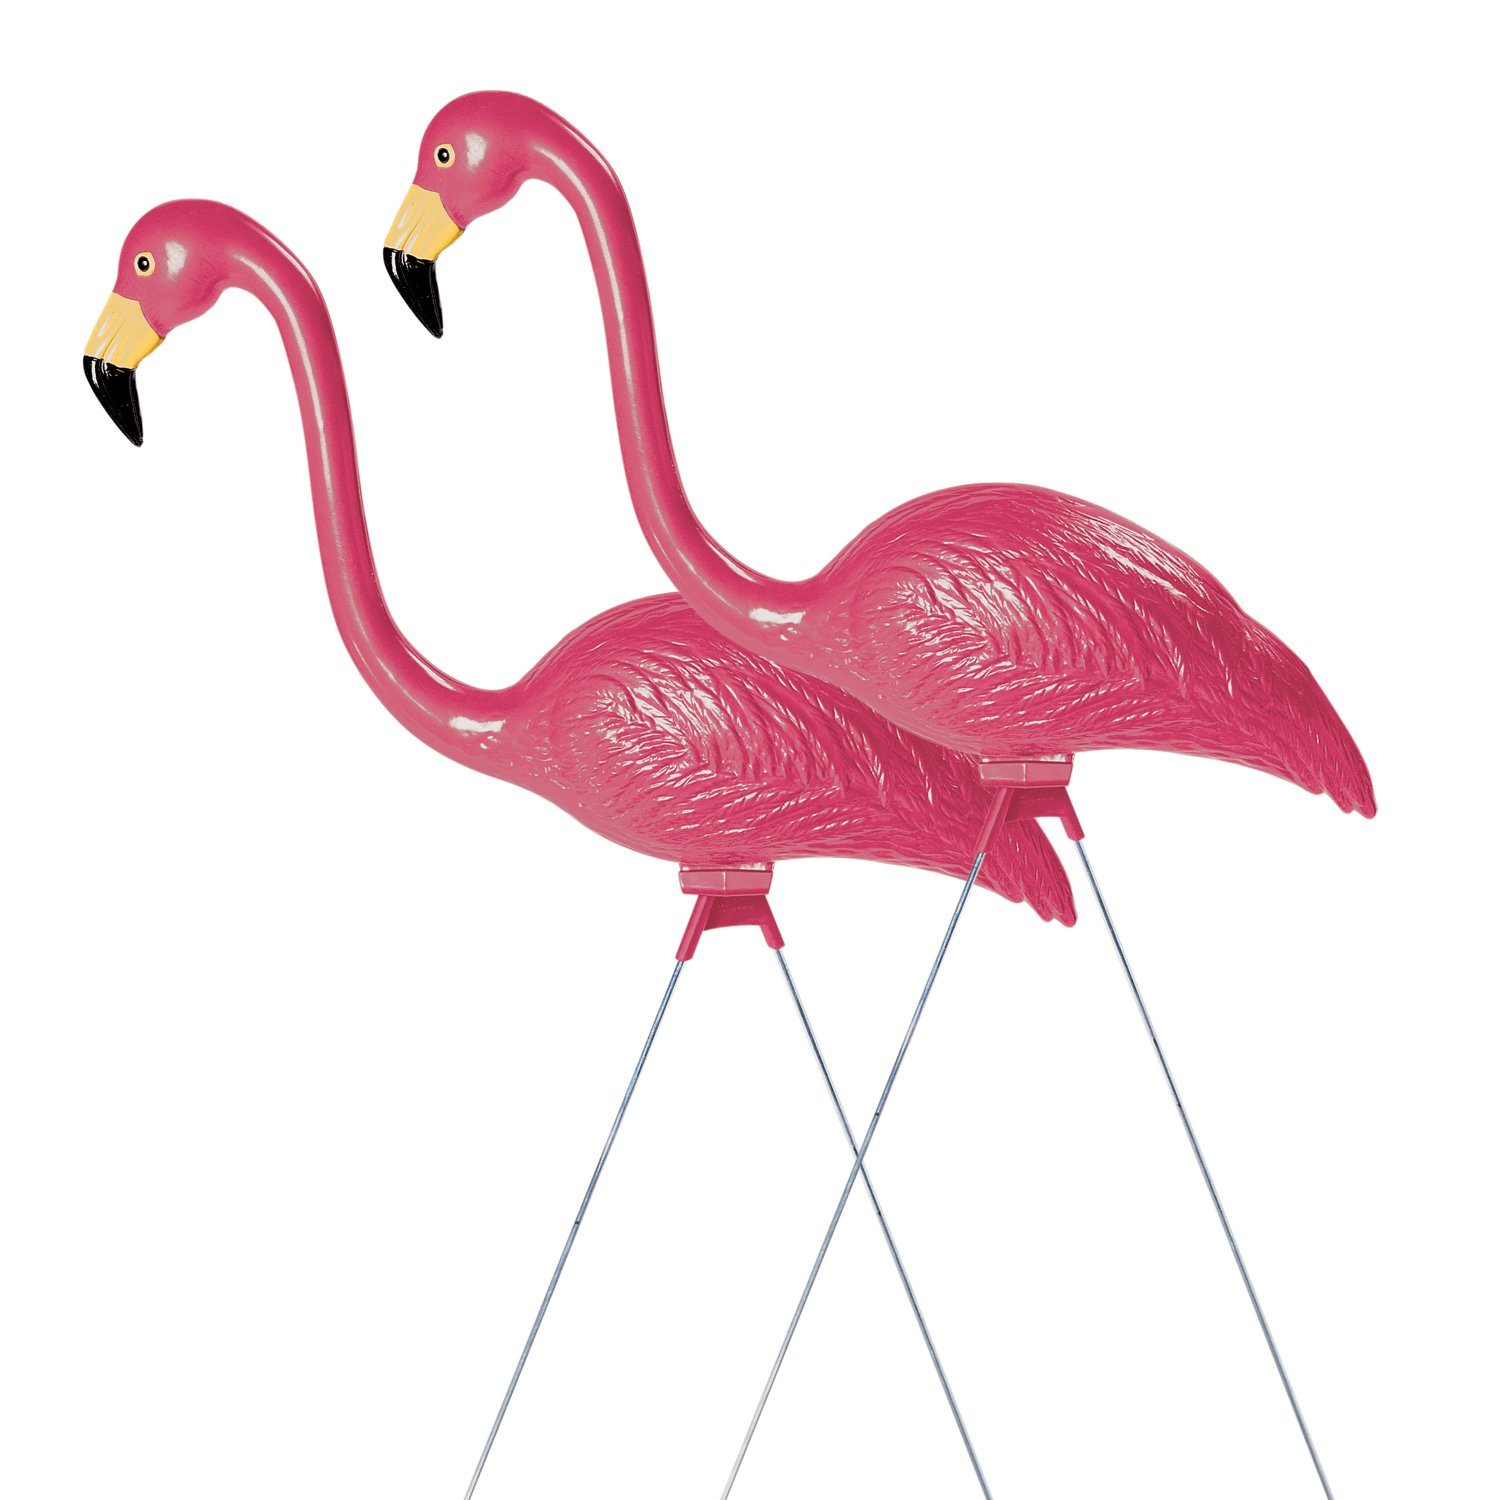 Amazon.com : Sculptural Gardens Pink Flamingo Lawn Ornament, Pair ...